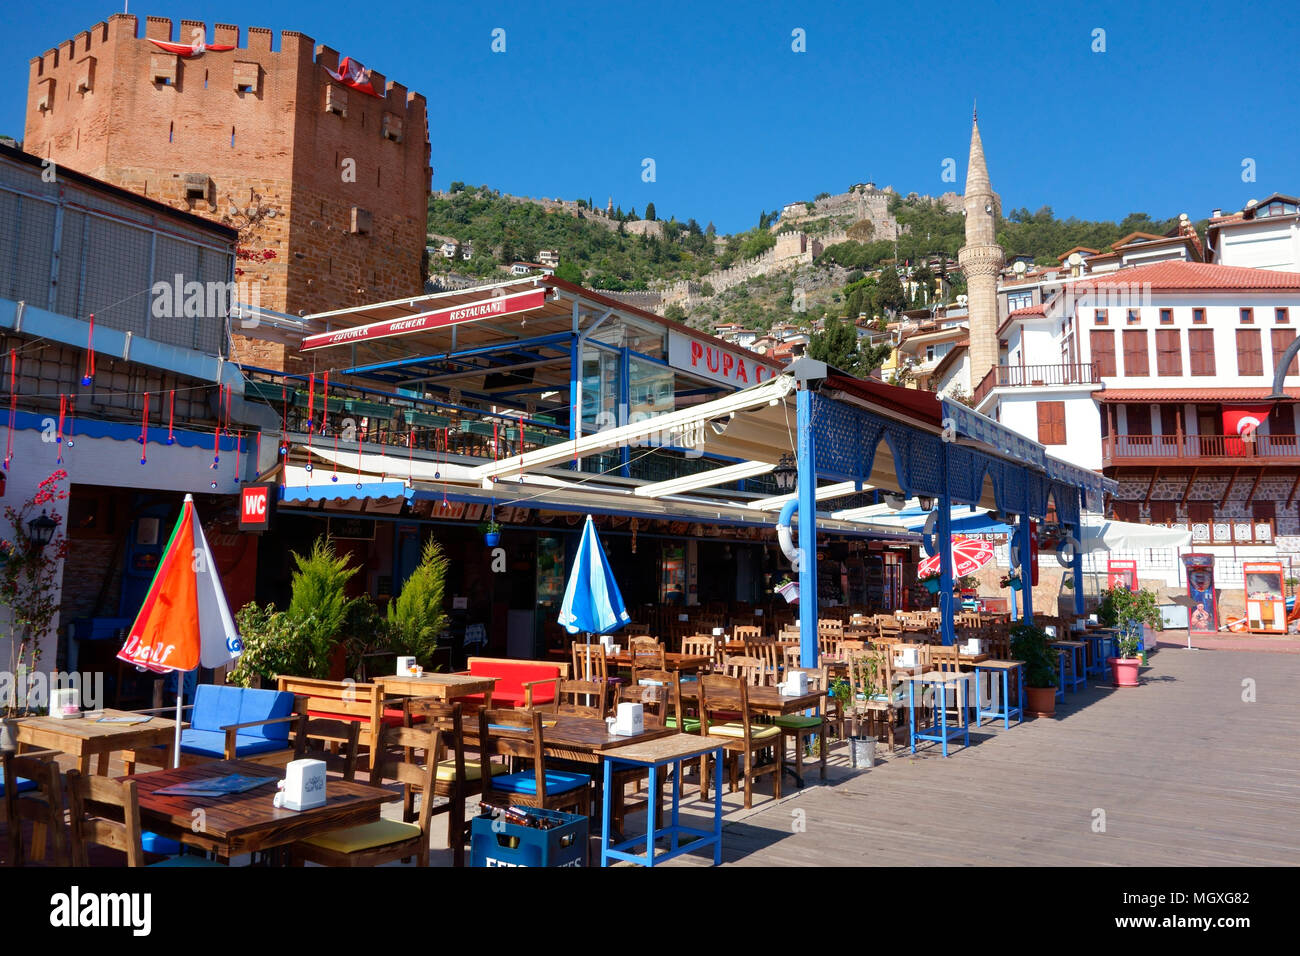 elskerinde Håbefuld Menda City Seafront cafe near Red Tower (Kızıl Kule), Alanya, Mediterranean sea coast,  Turkey Stock Photo - Alamy